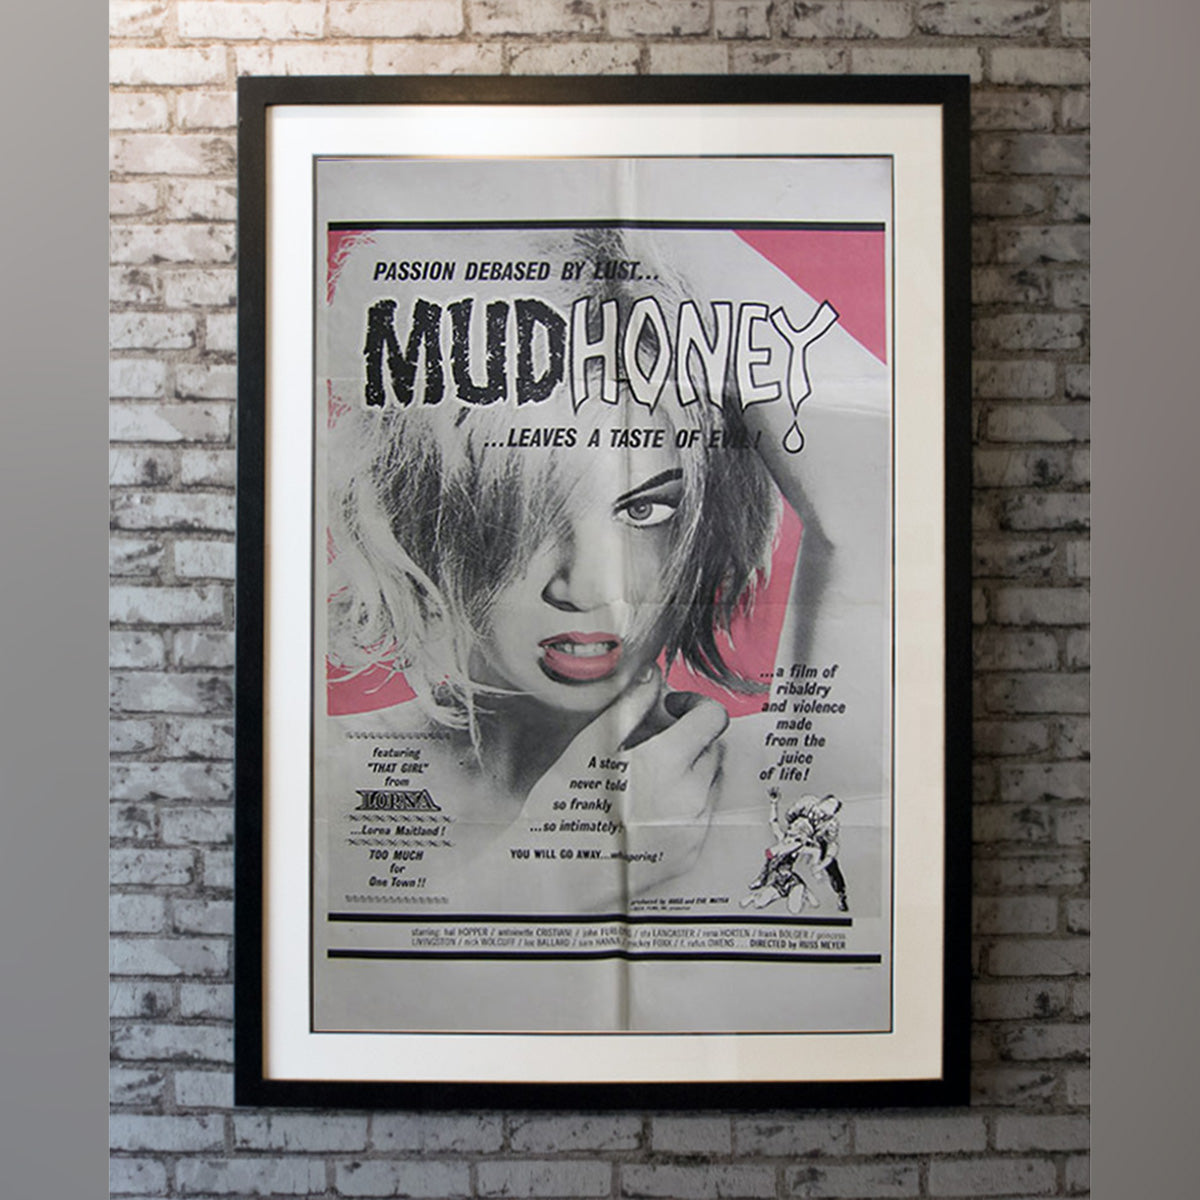 Original Movie Poster of Mudhoney (1965)